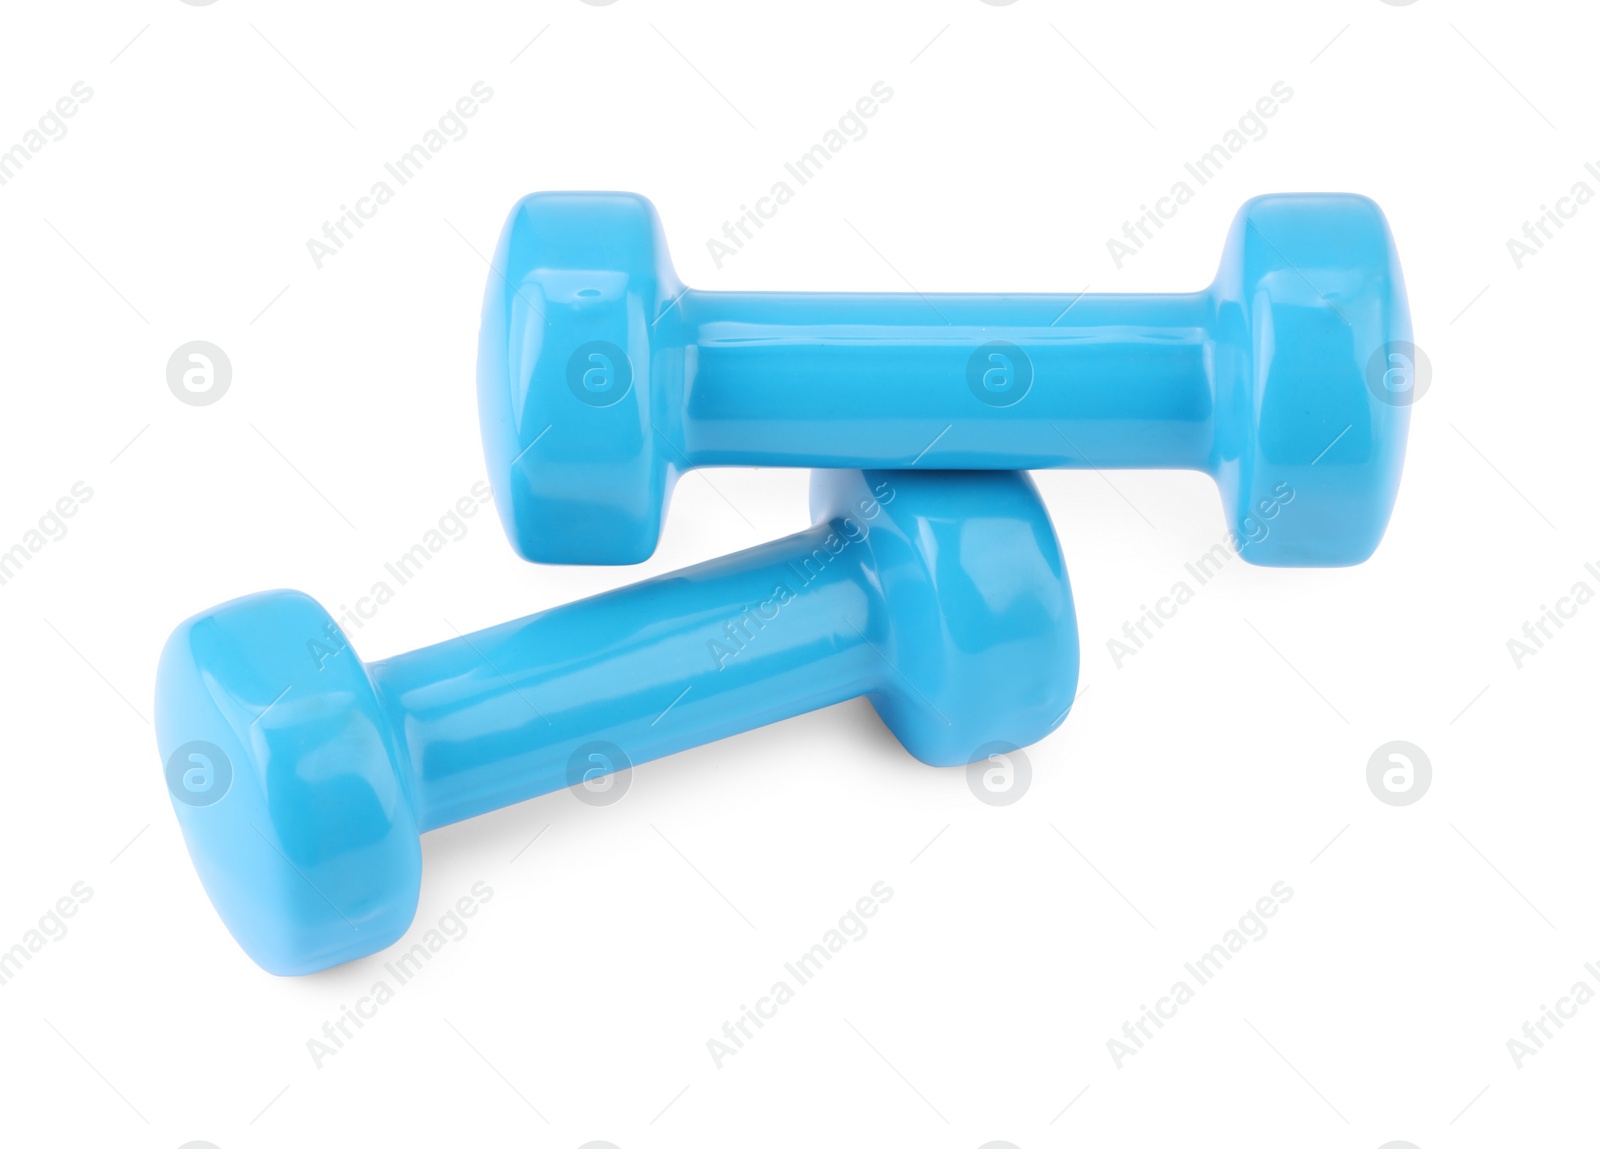 Photo of Light blue dumbbells isolated on white. Sports equipment